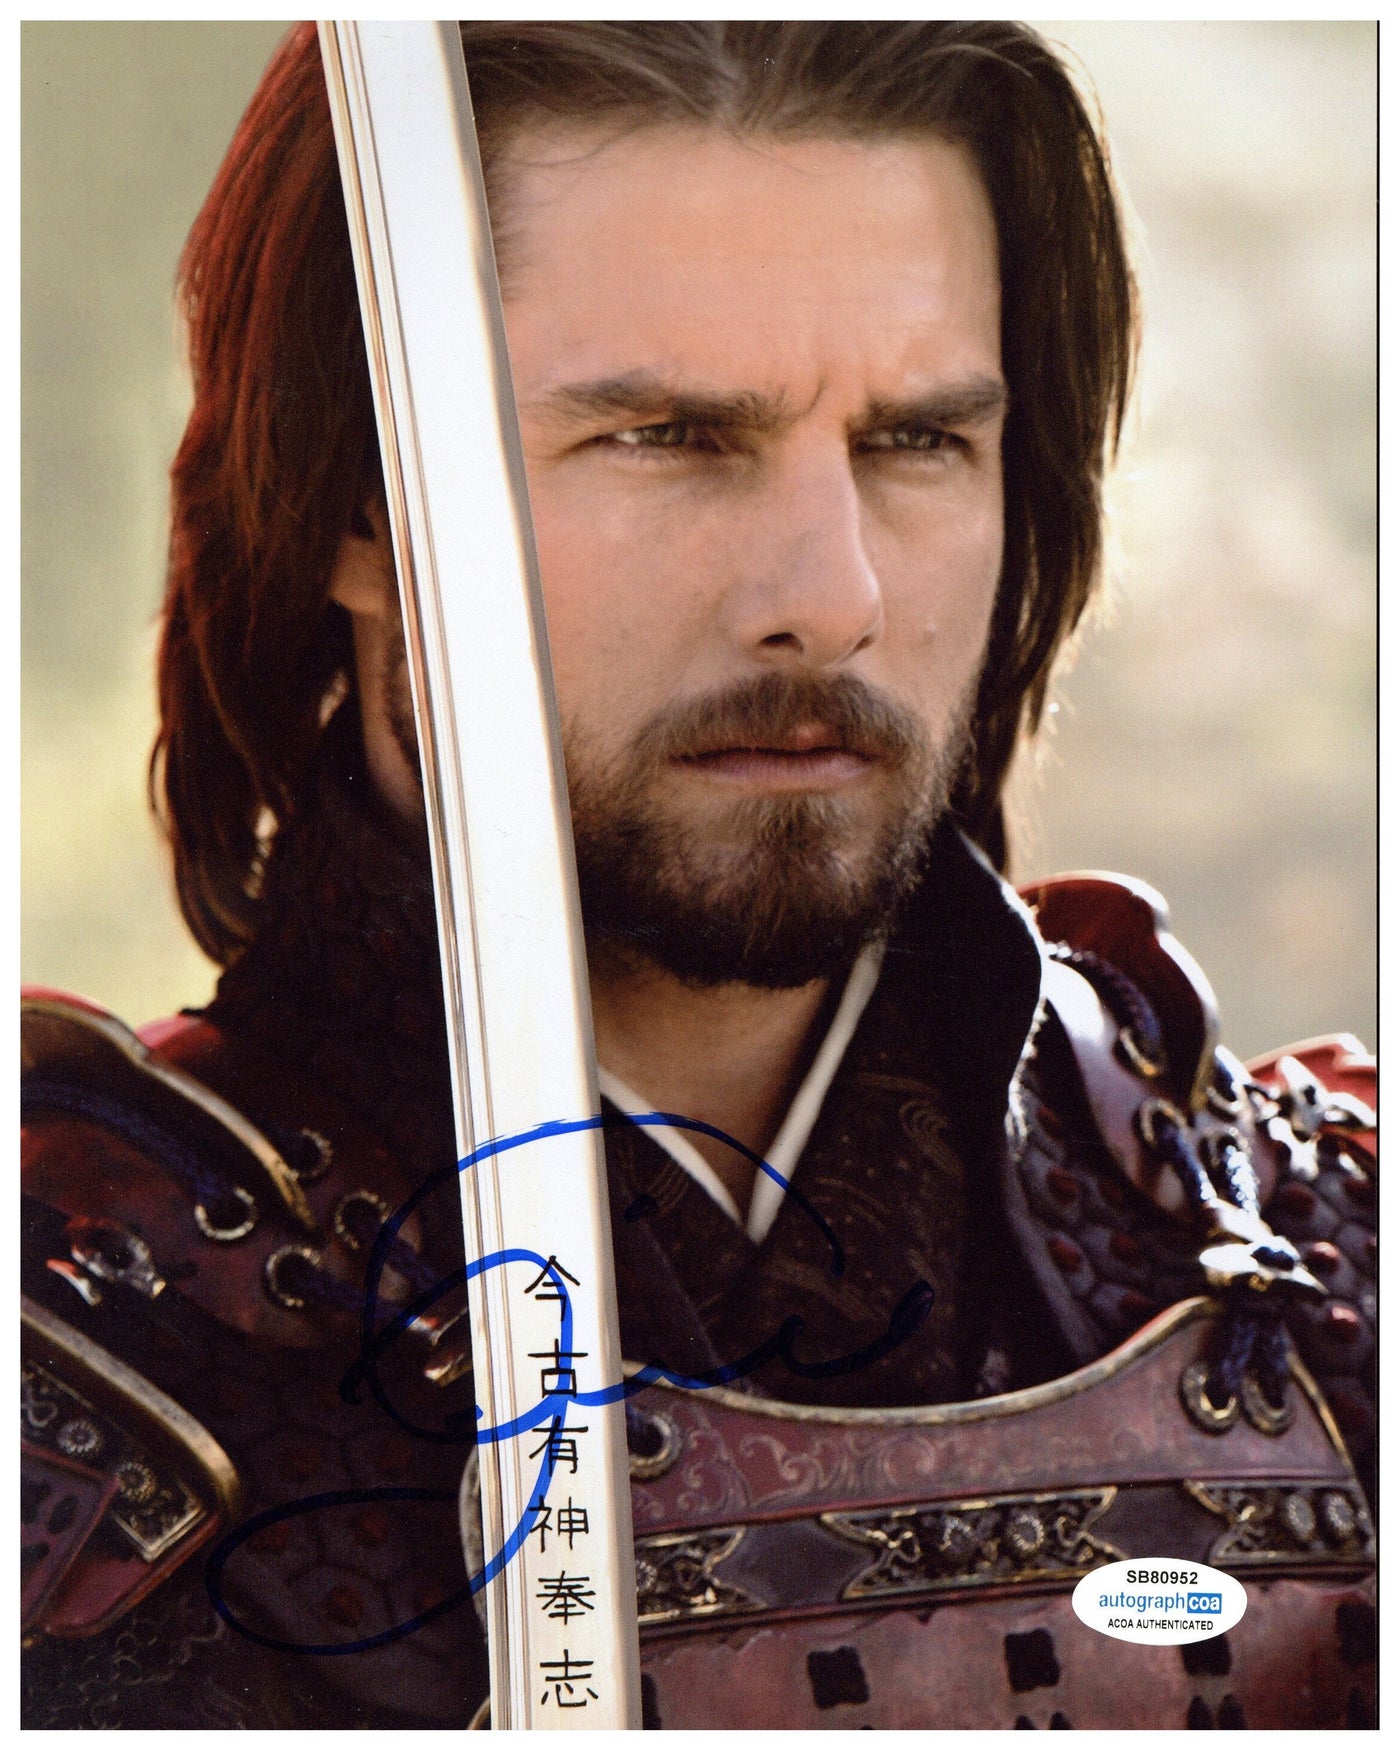 Tom Cruise Signed 8x10 Photo The Last Samurai Autographed Authentic ACOA